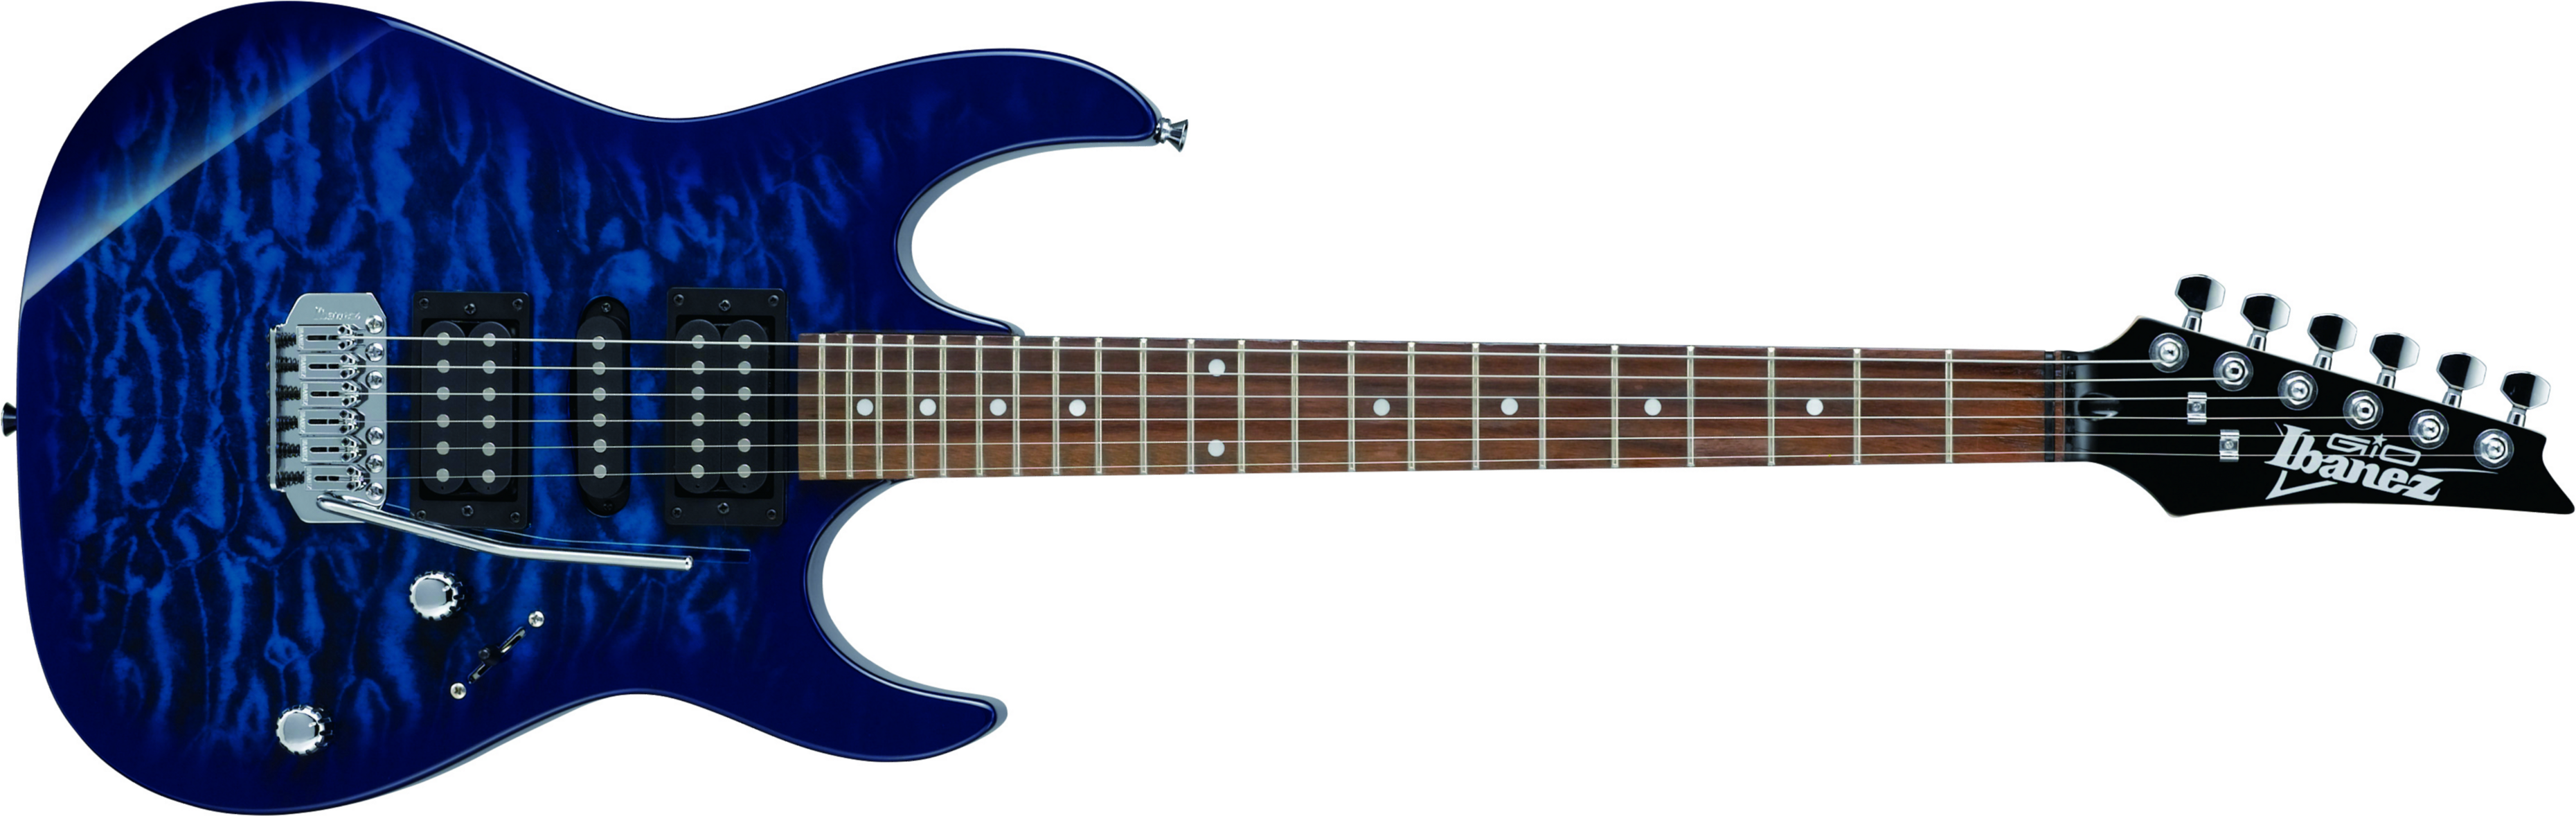 Ibanez Grx70qa Tbb Gio Hsh Trem Nzp - Transparent Blue Burst - E-Gitarre in Str-Form - Main picture